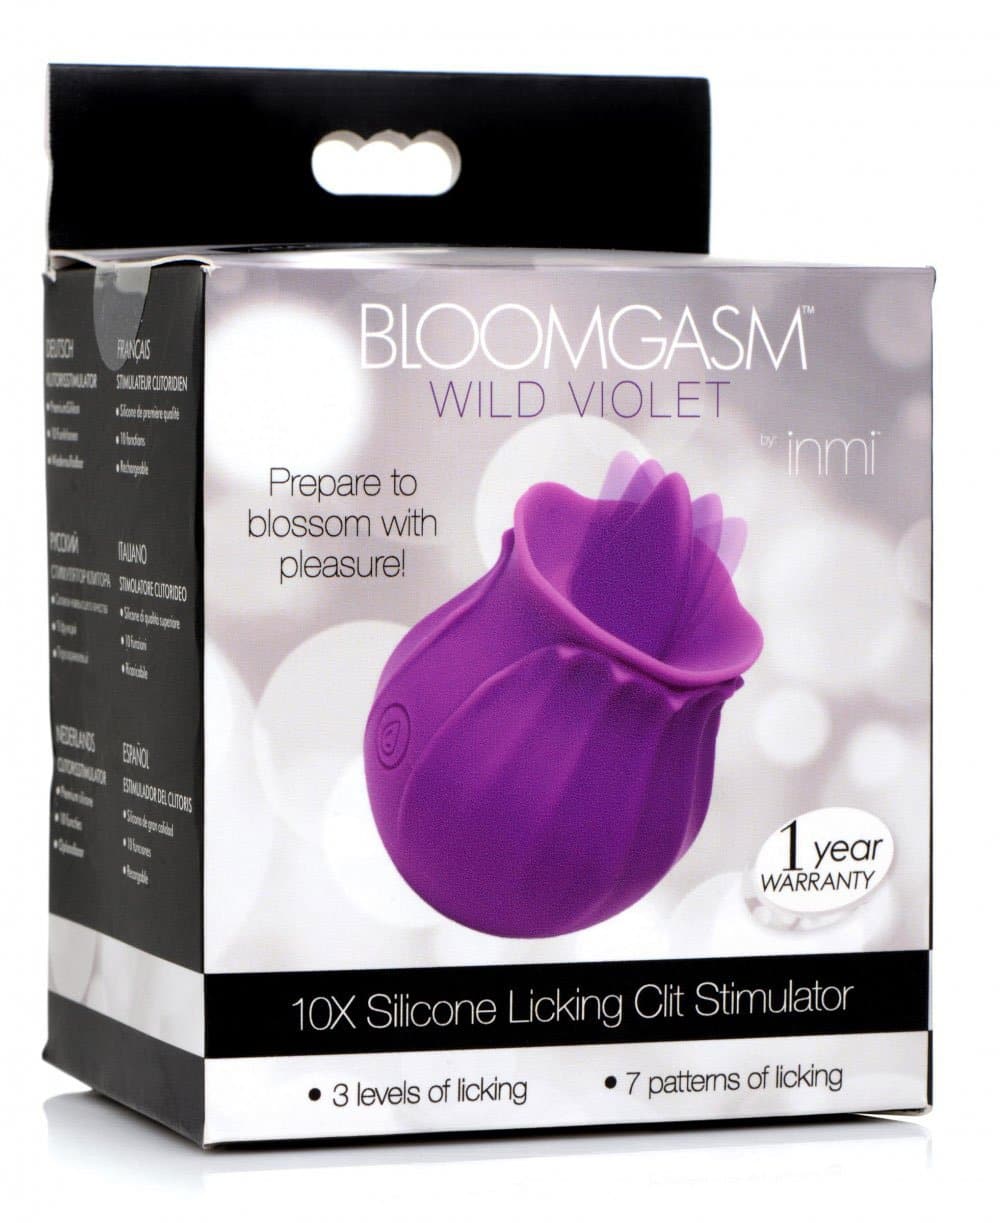 inmi bloomgasm wild violet licking silicone stimulator violet